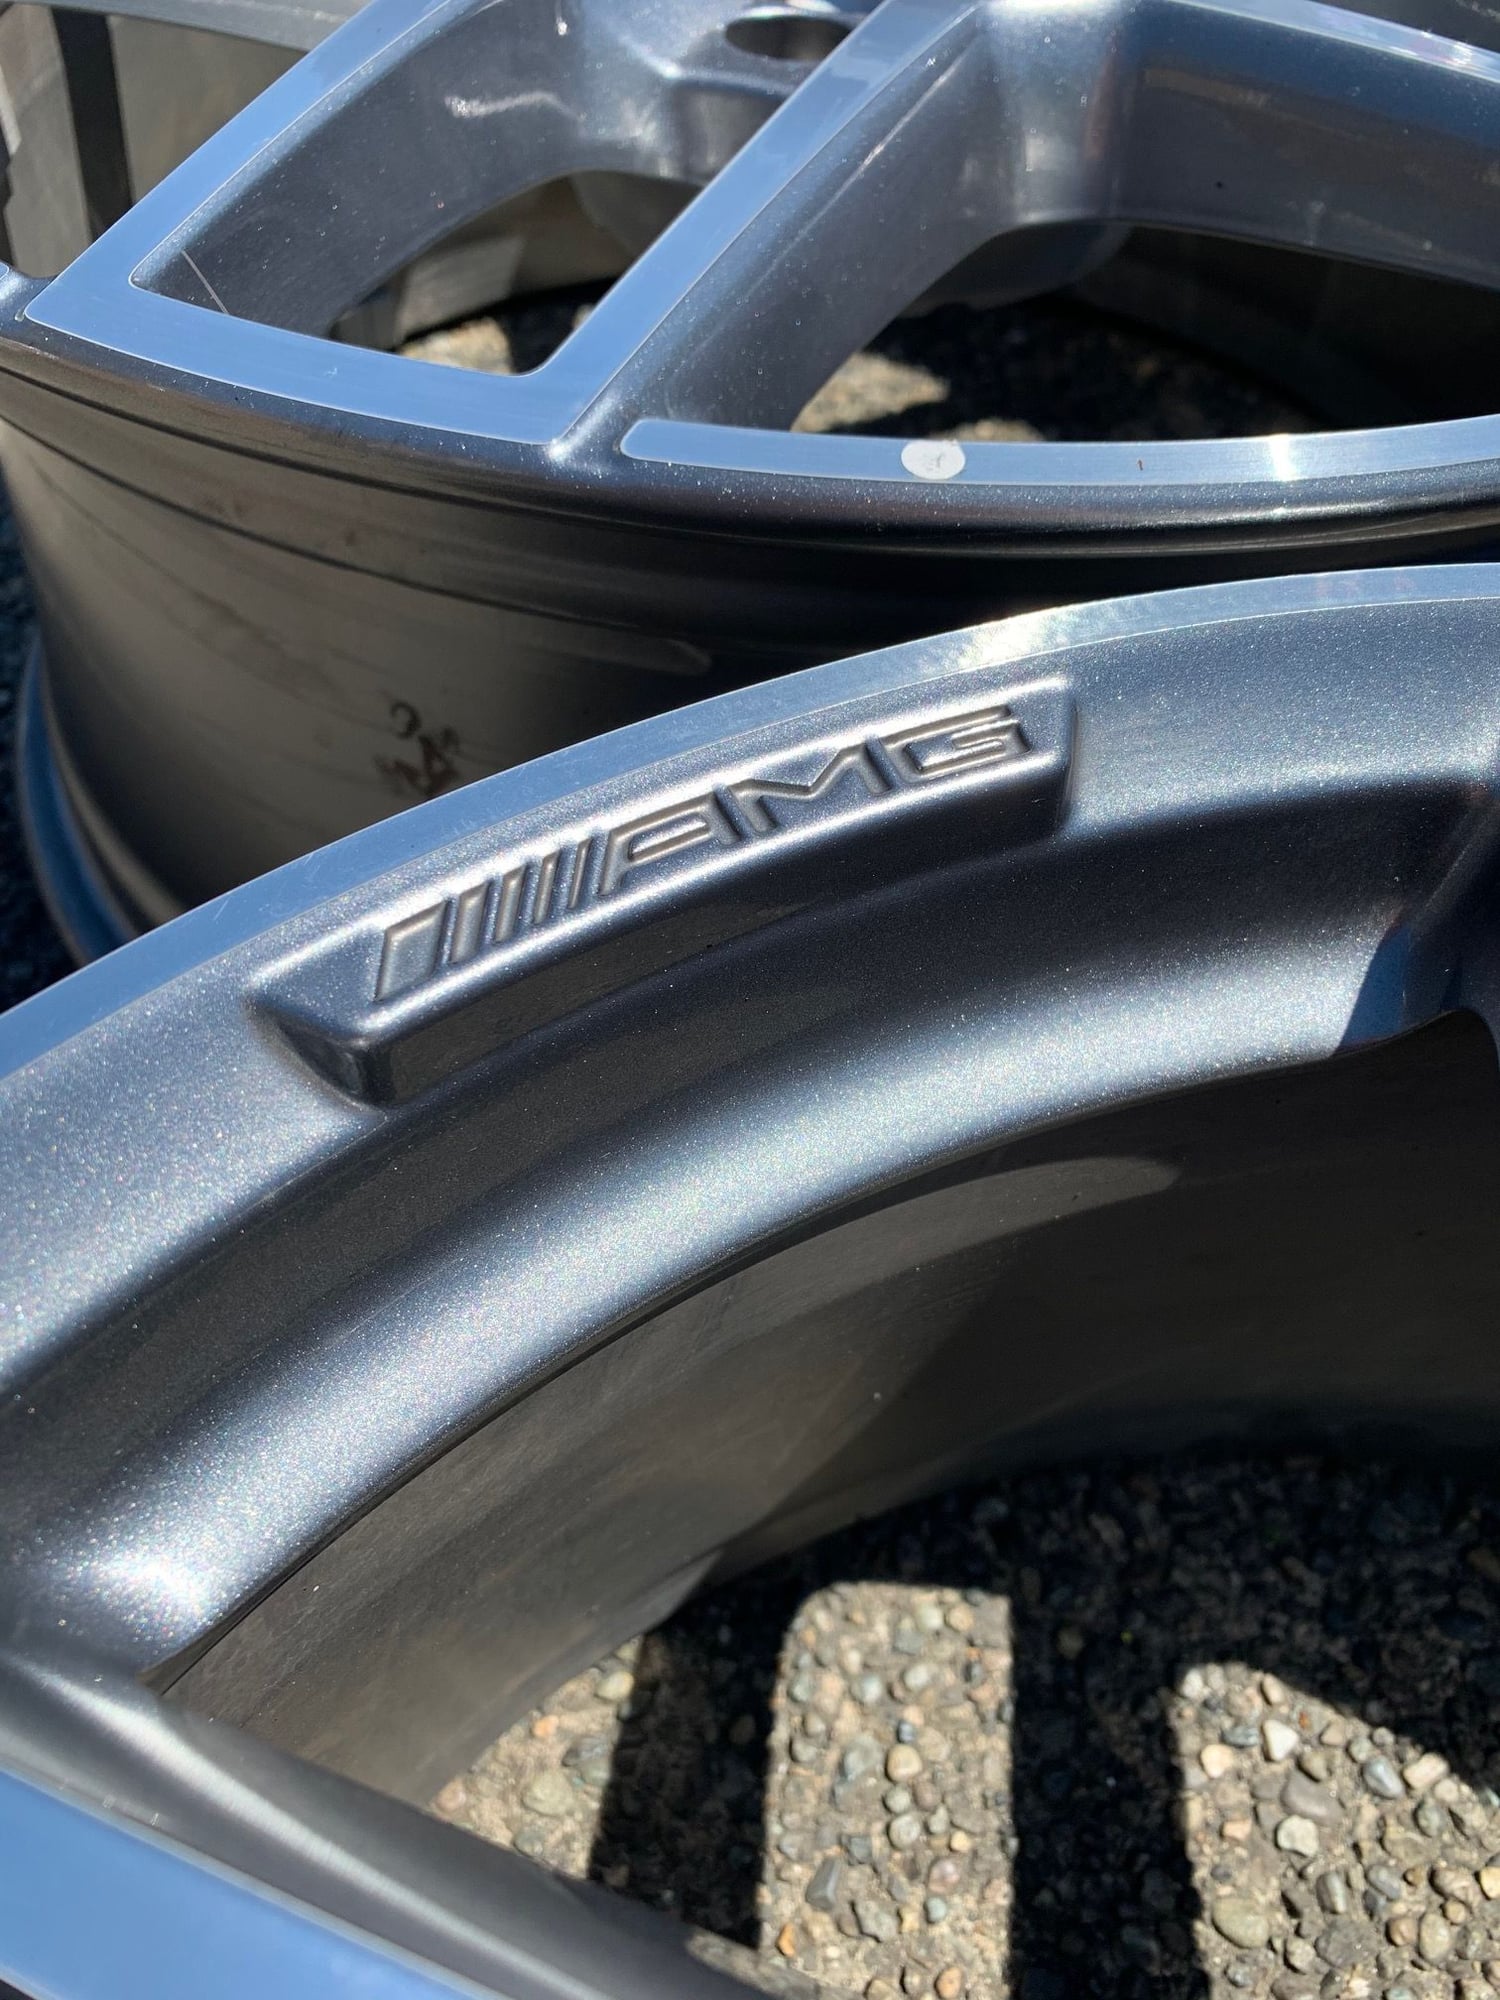 Wheels and Tires/Axles - Mercedes GLC AMG 19" Wheel Rim Set Genuine OEM - Used - 2016 to 2019 Mercedes-Benz GLC300 - Seattle, WA 98003, United States